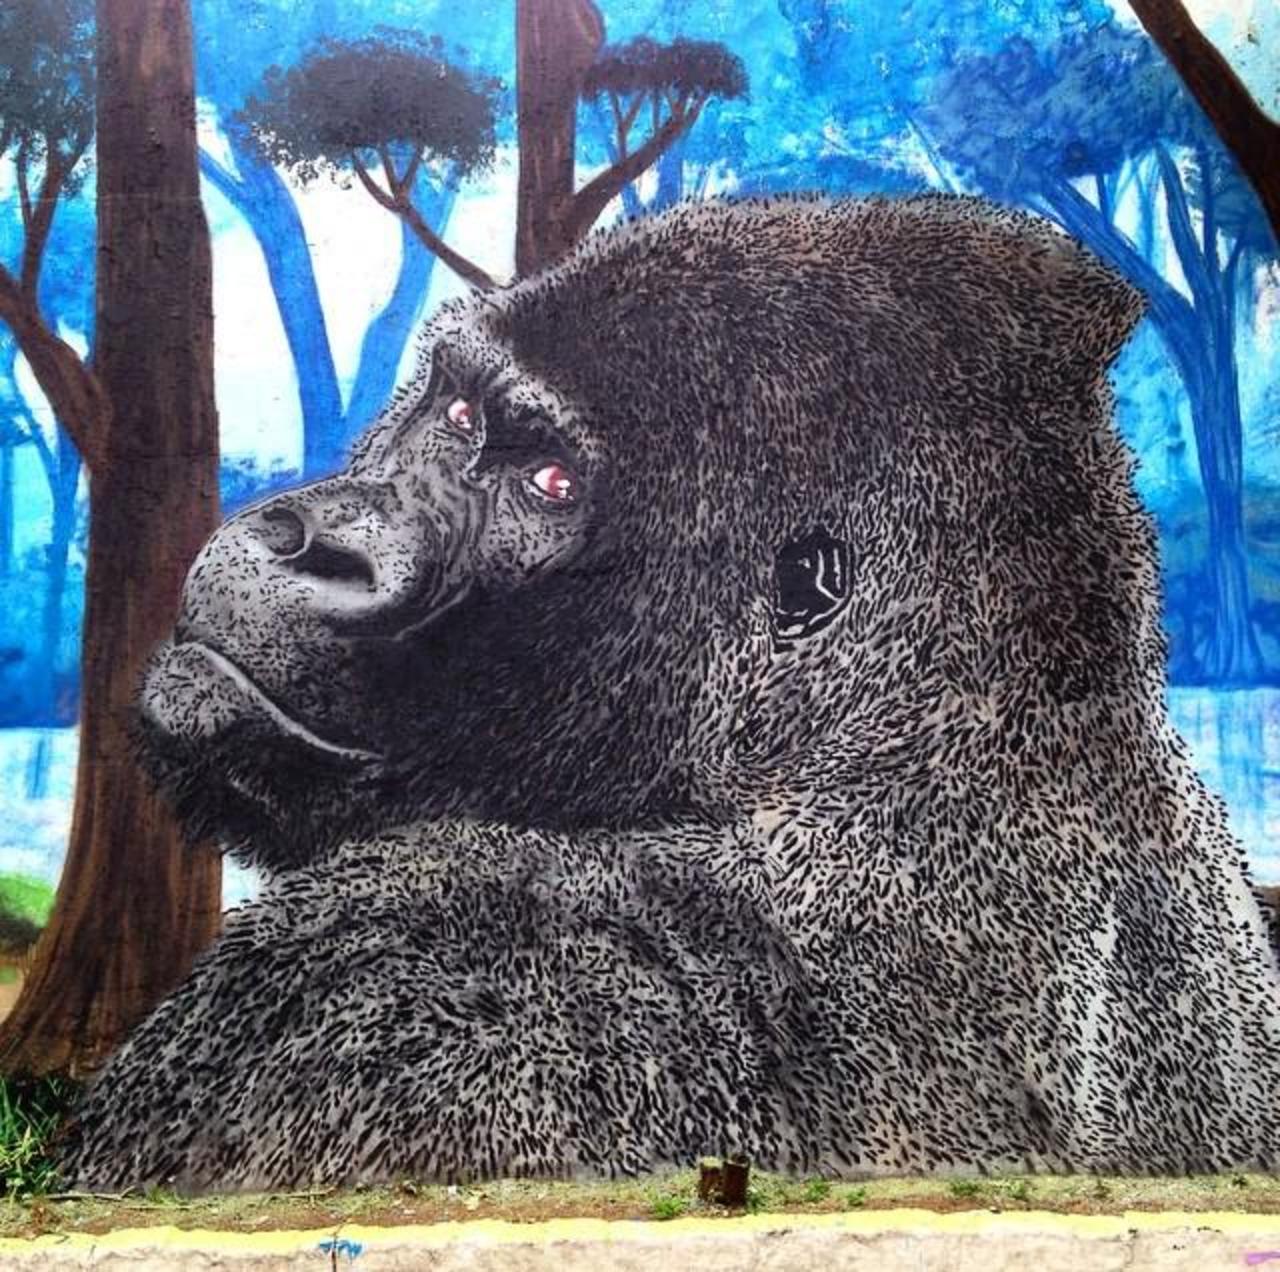 Superb Nature in Street Art piece by Thassio in São Paulo, Brazil  

#art #mural #graffiti #streetart http://t.co/cAGO4xcwXv